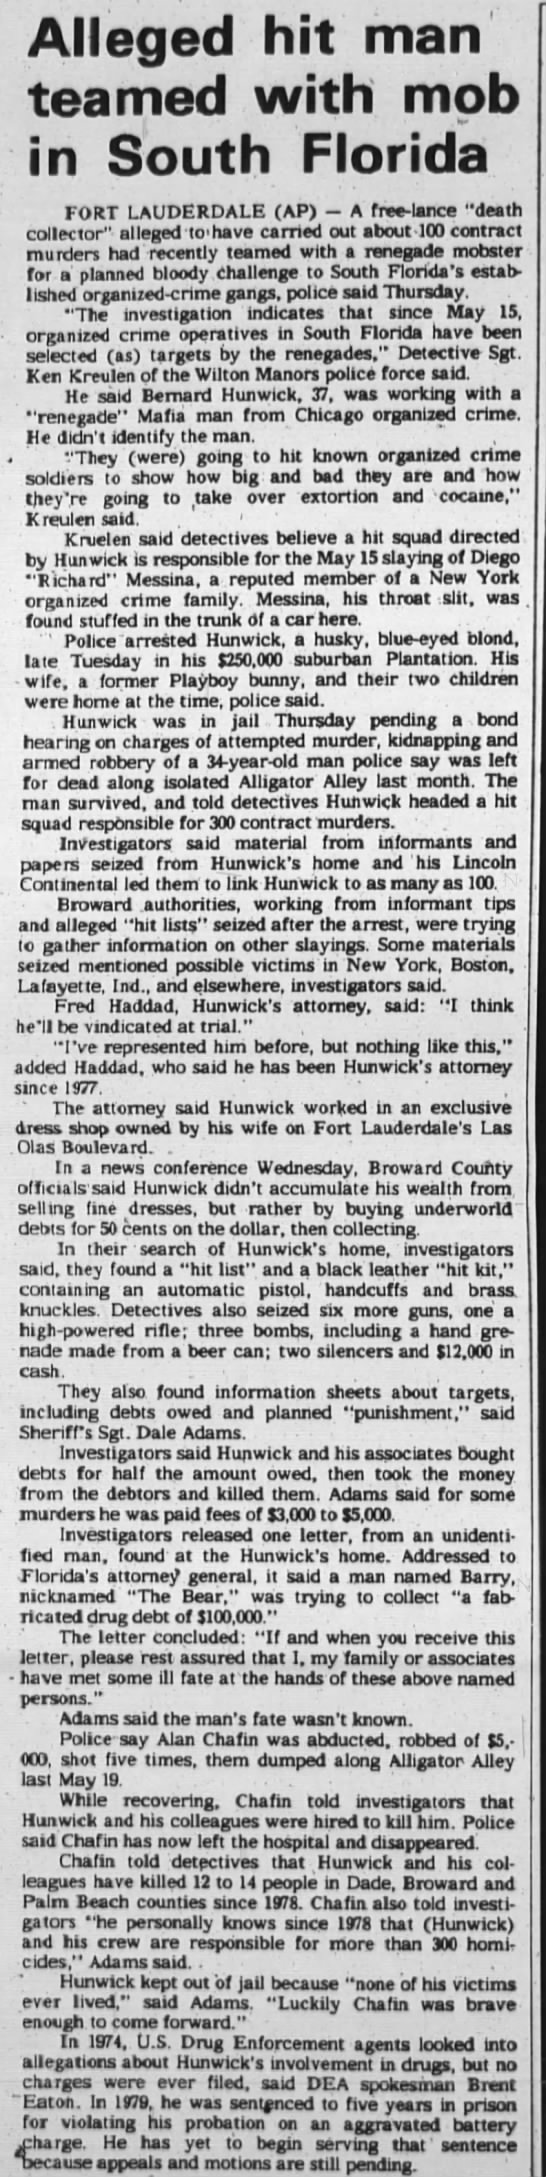 Hunwick Hitman Teamed with Mob June 11, 1982 - 